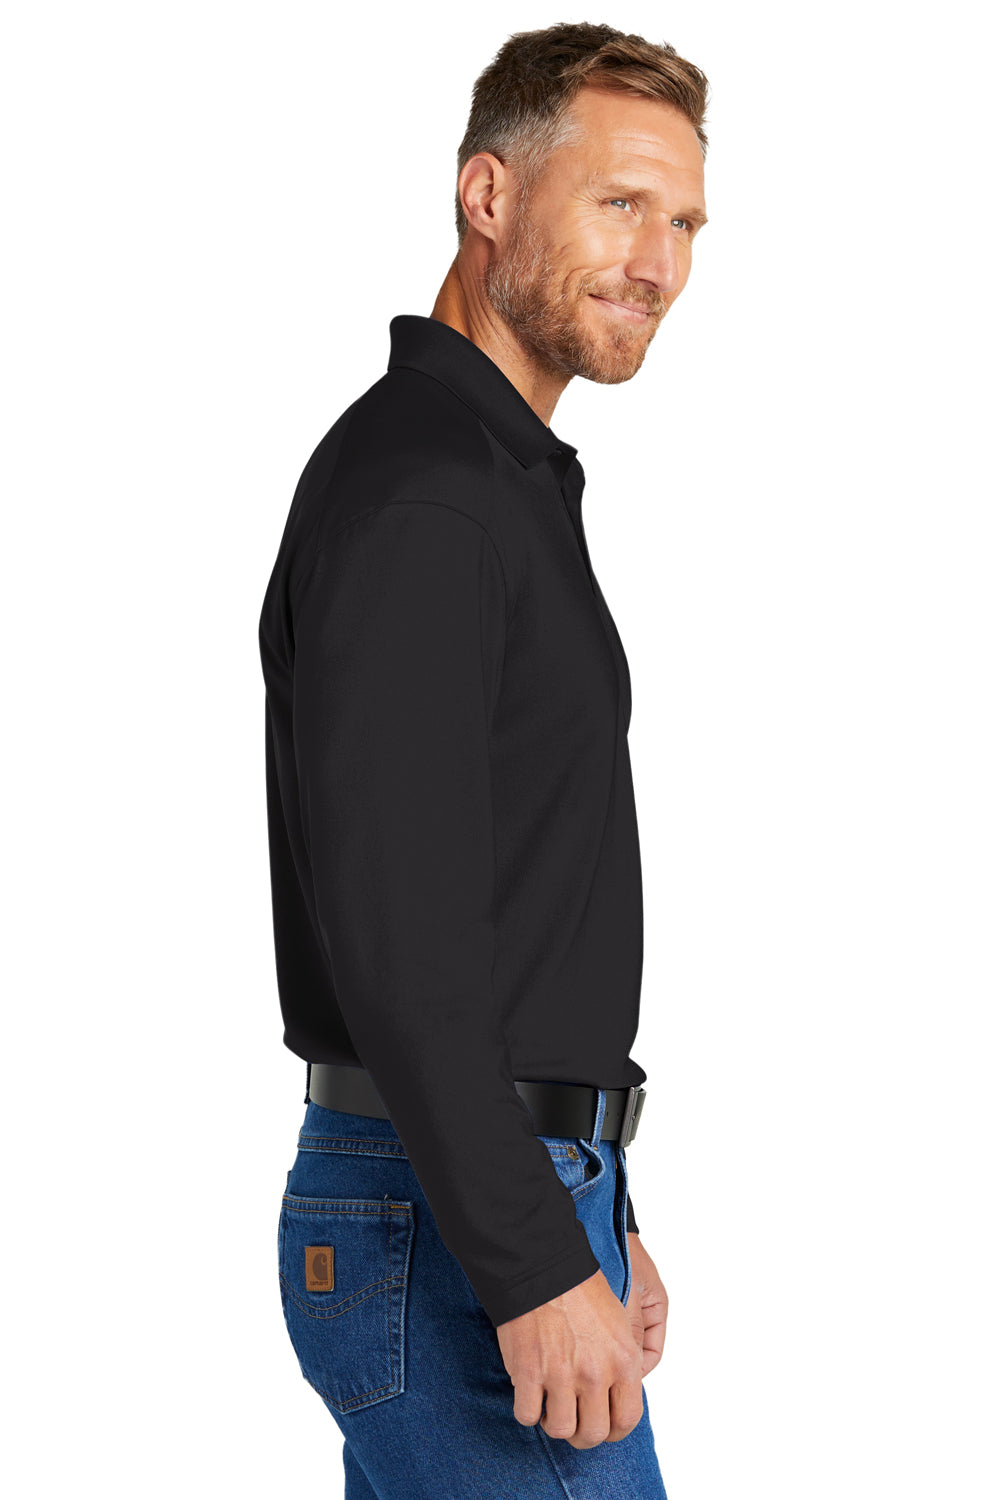 CornerStone CS418LS Select Long Sleeve Polo Shirt Black Side